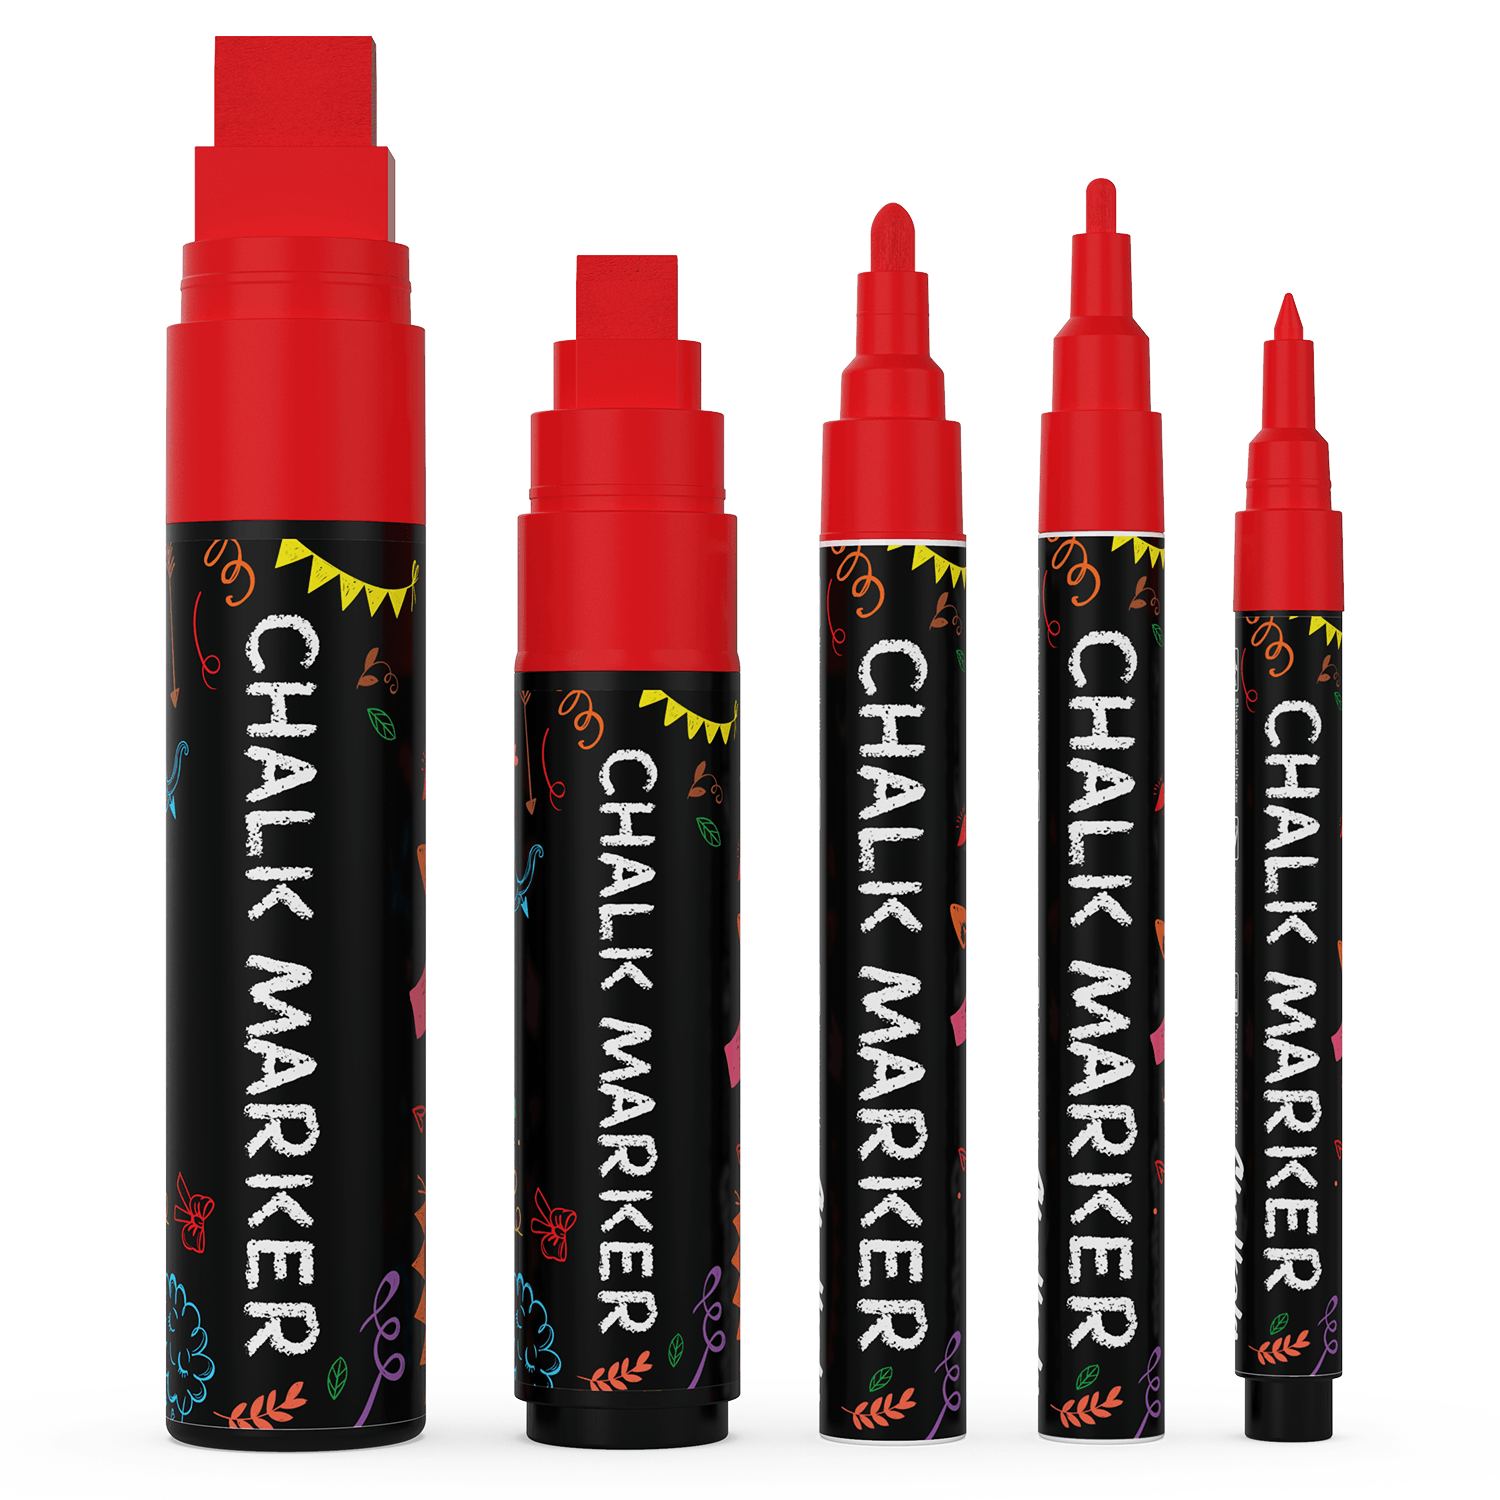 Chalkola White Chalk Markers - White Dry Erase Liquid Chalk Pens for  Chalkboard, Blackboard, Window, Bistro, Car Glass, Board, Signs - 1mm Extra Fine  Tip Chalkboard Chalk Markers - Yahoo Shopping